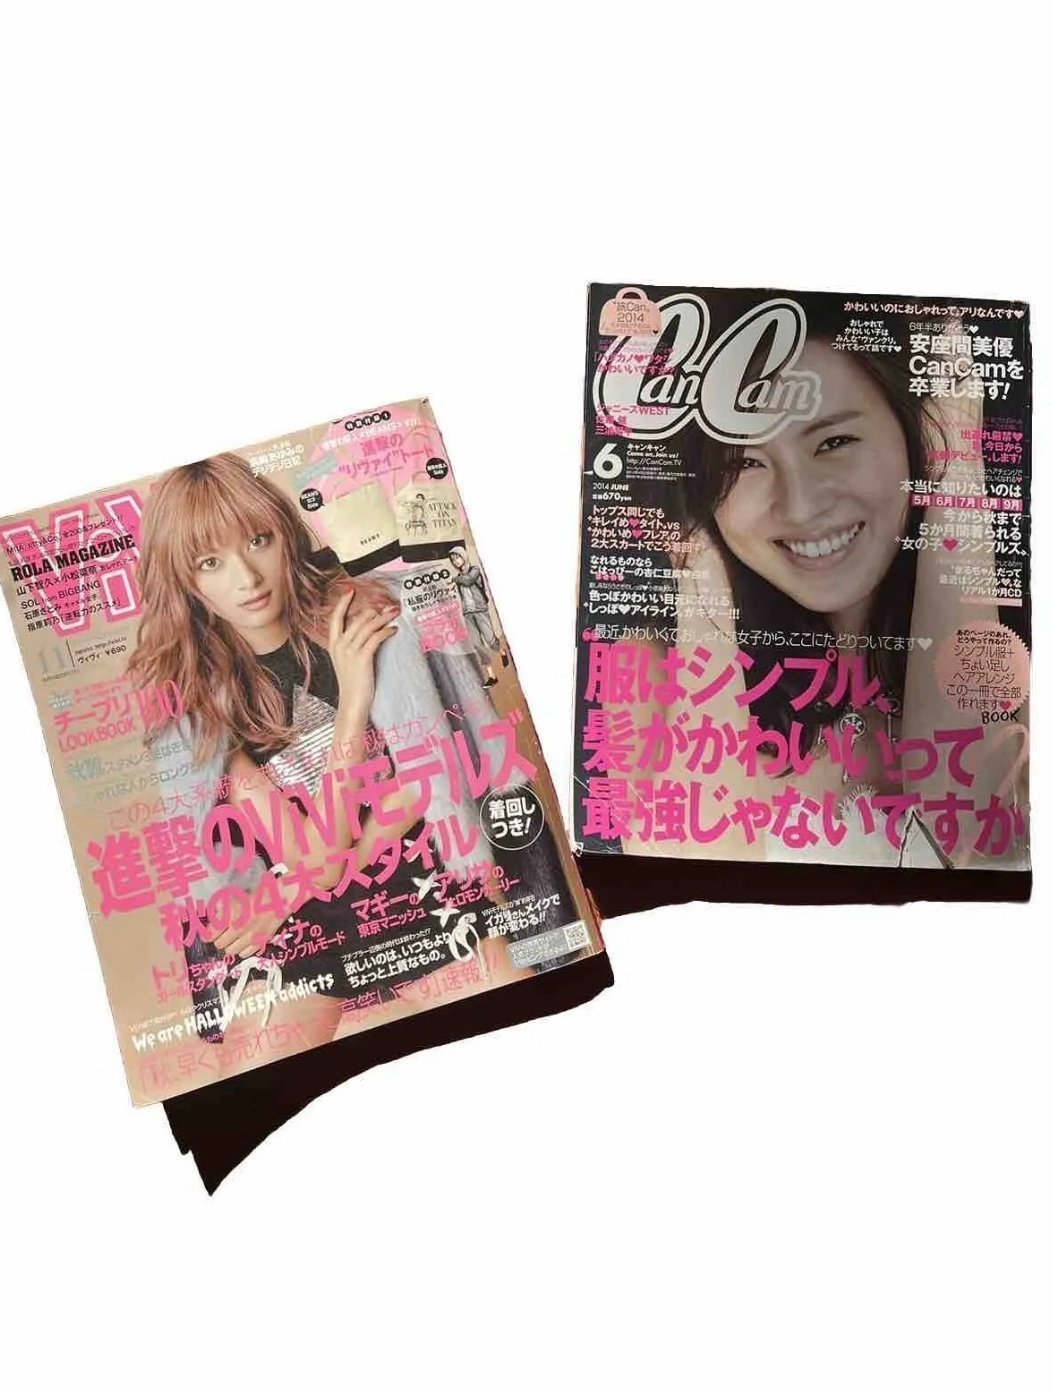 Japanese fashion magazines 2010s style bigbang 1xPFzcxzx